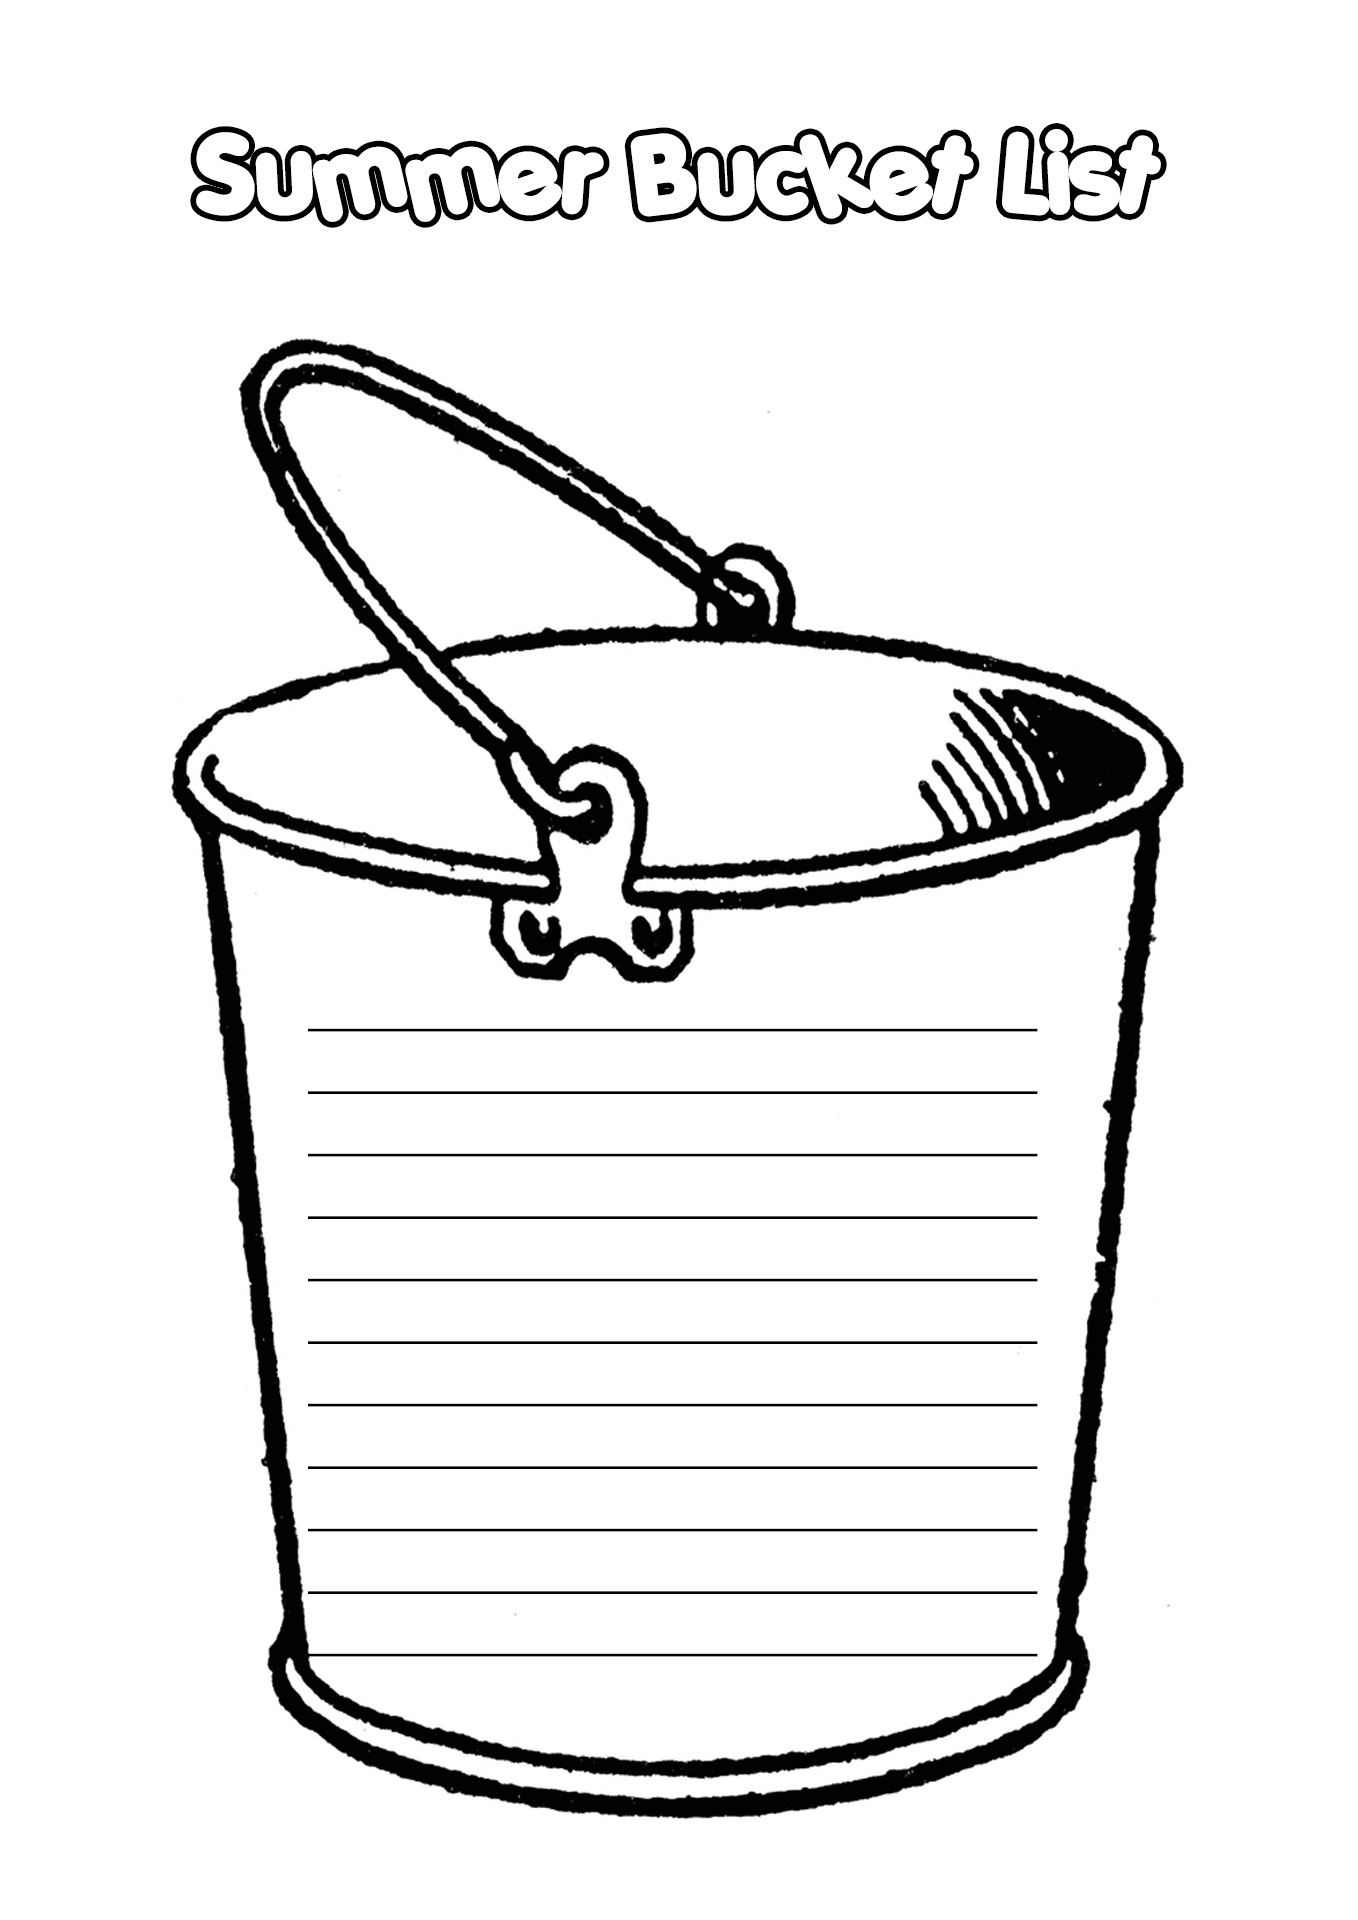 Printable Summer Bucket List Worksheet Image